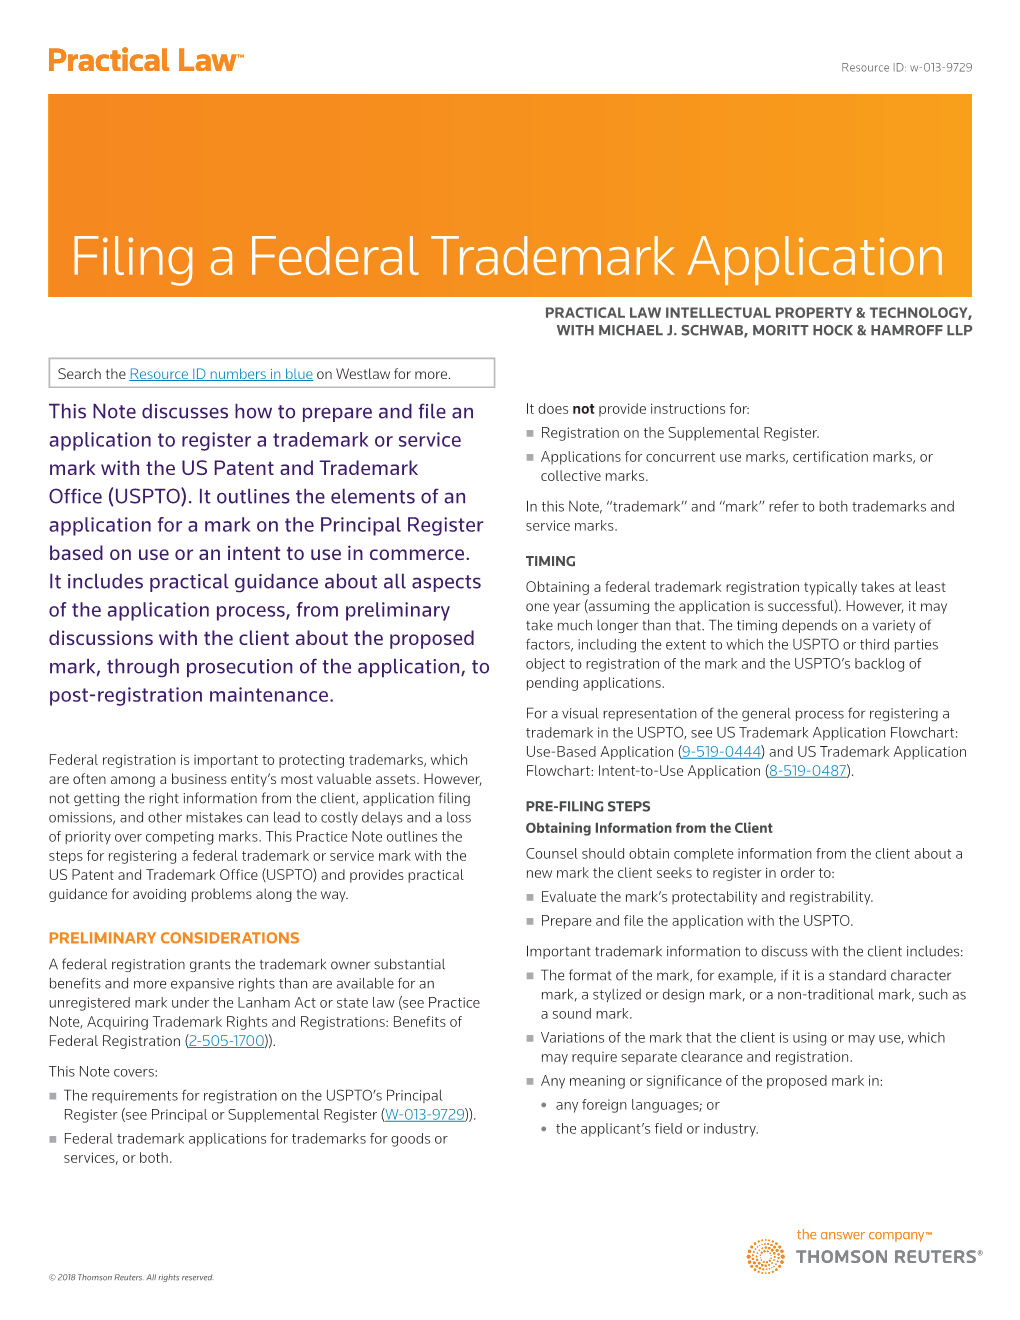 Filing a Federal Trademark Application